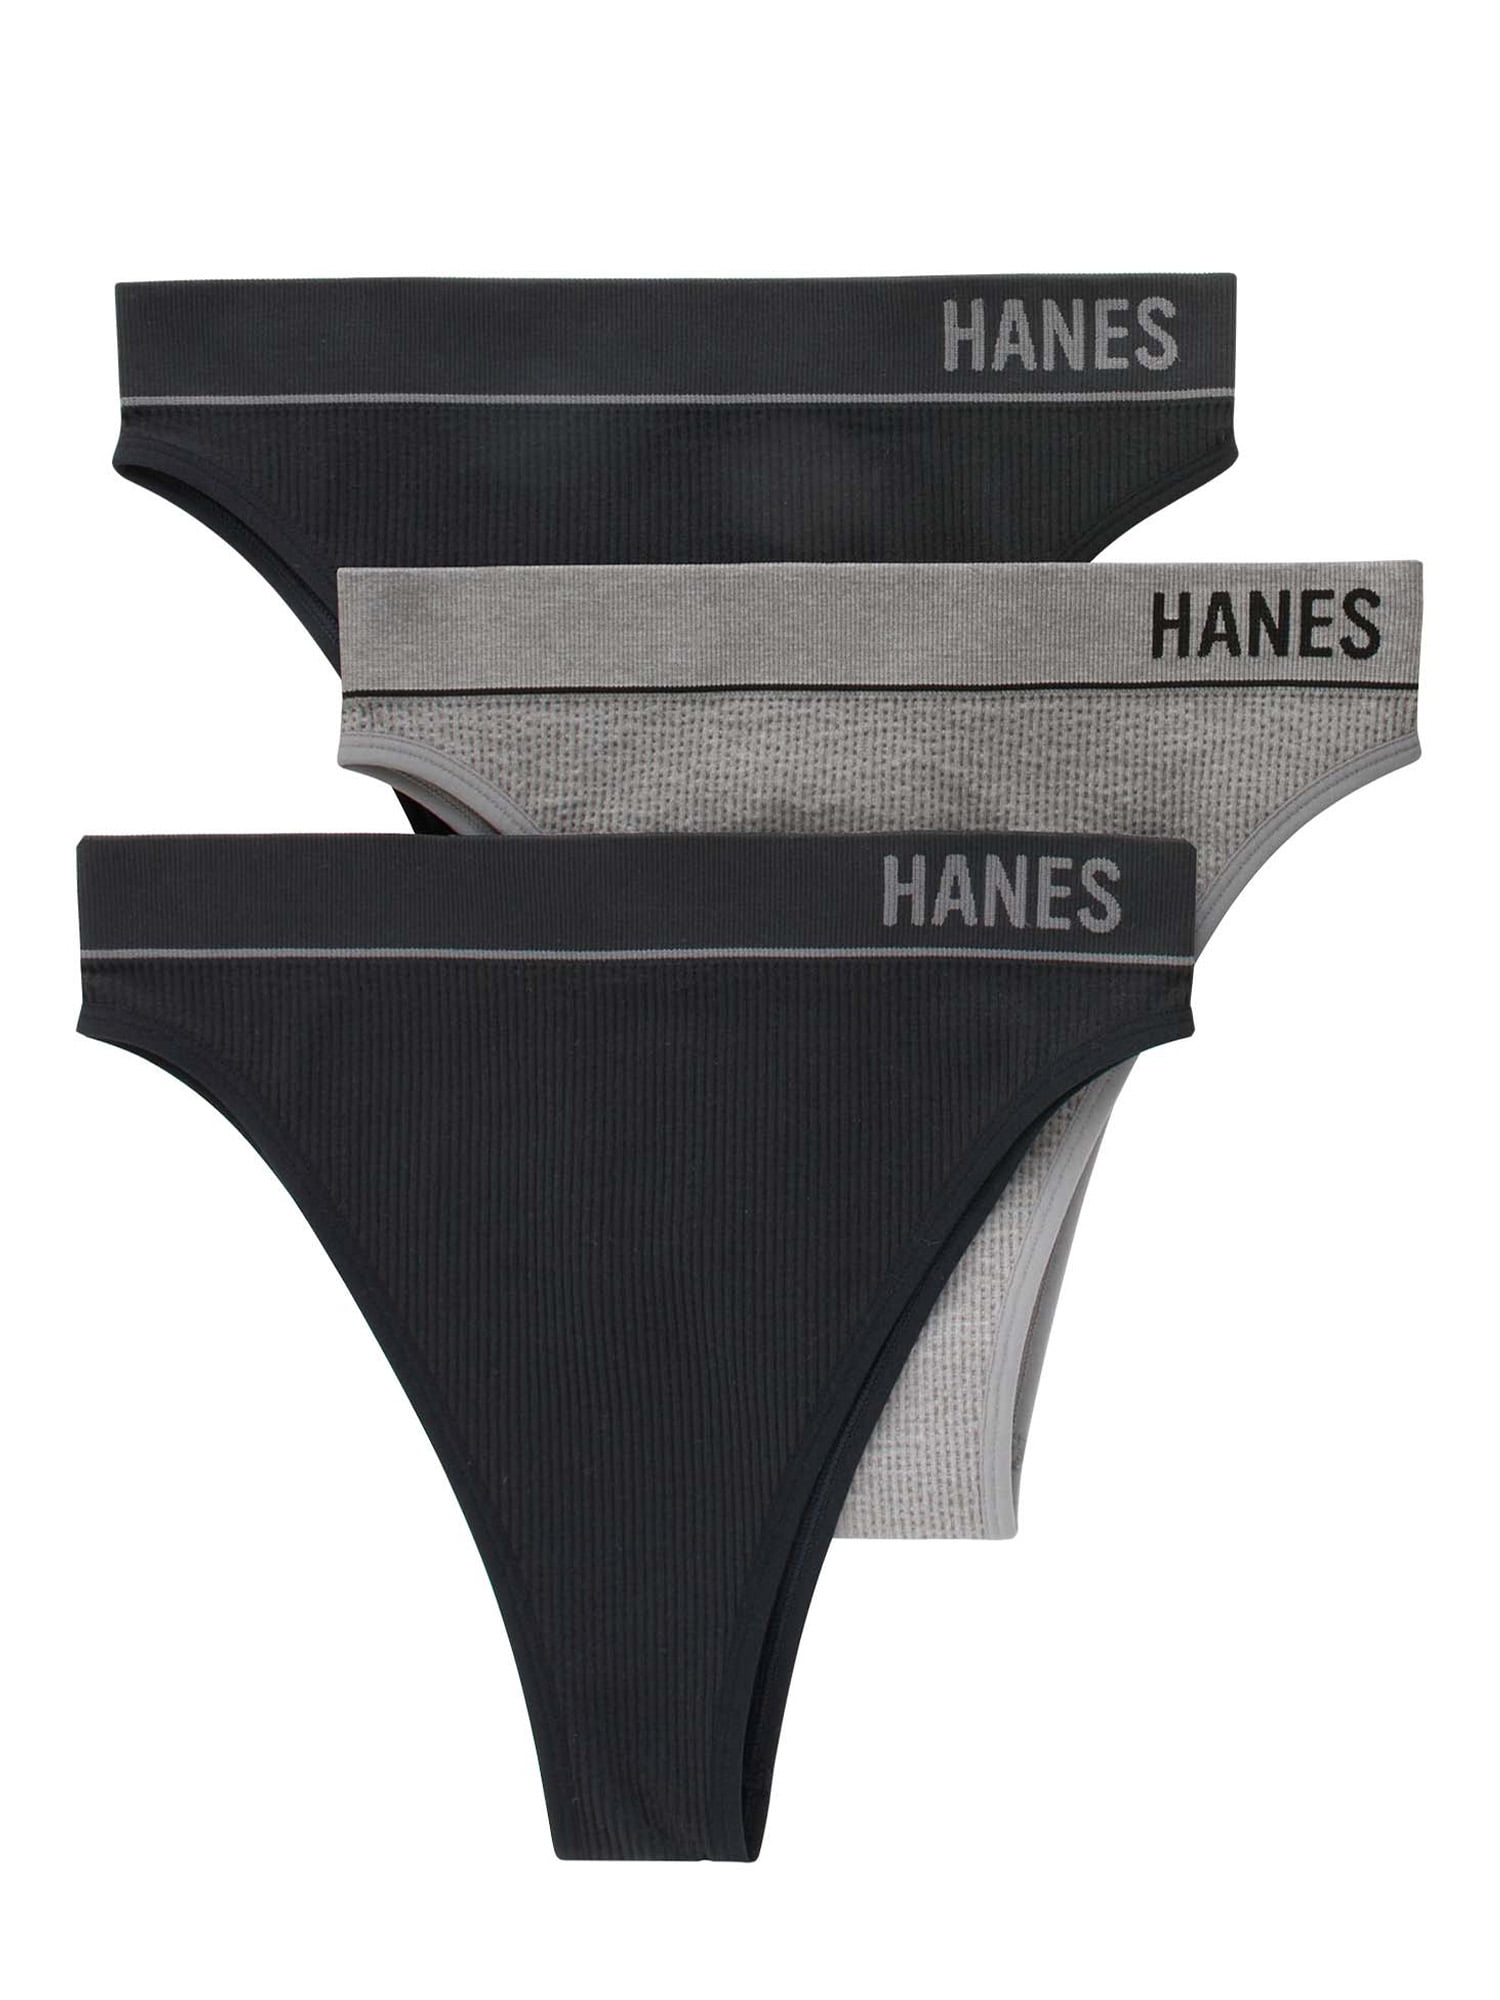 Hanes Originals Women's Seamless Rib Hi-Rise Cheeky Underwear, 3